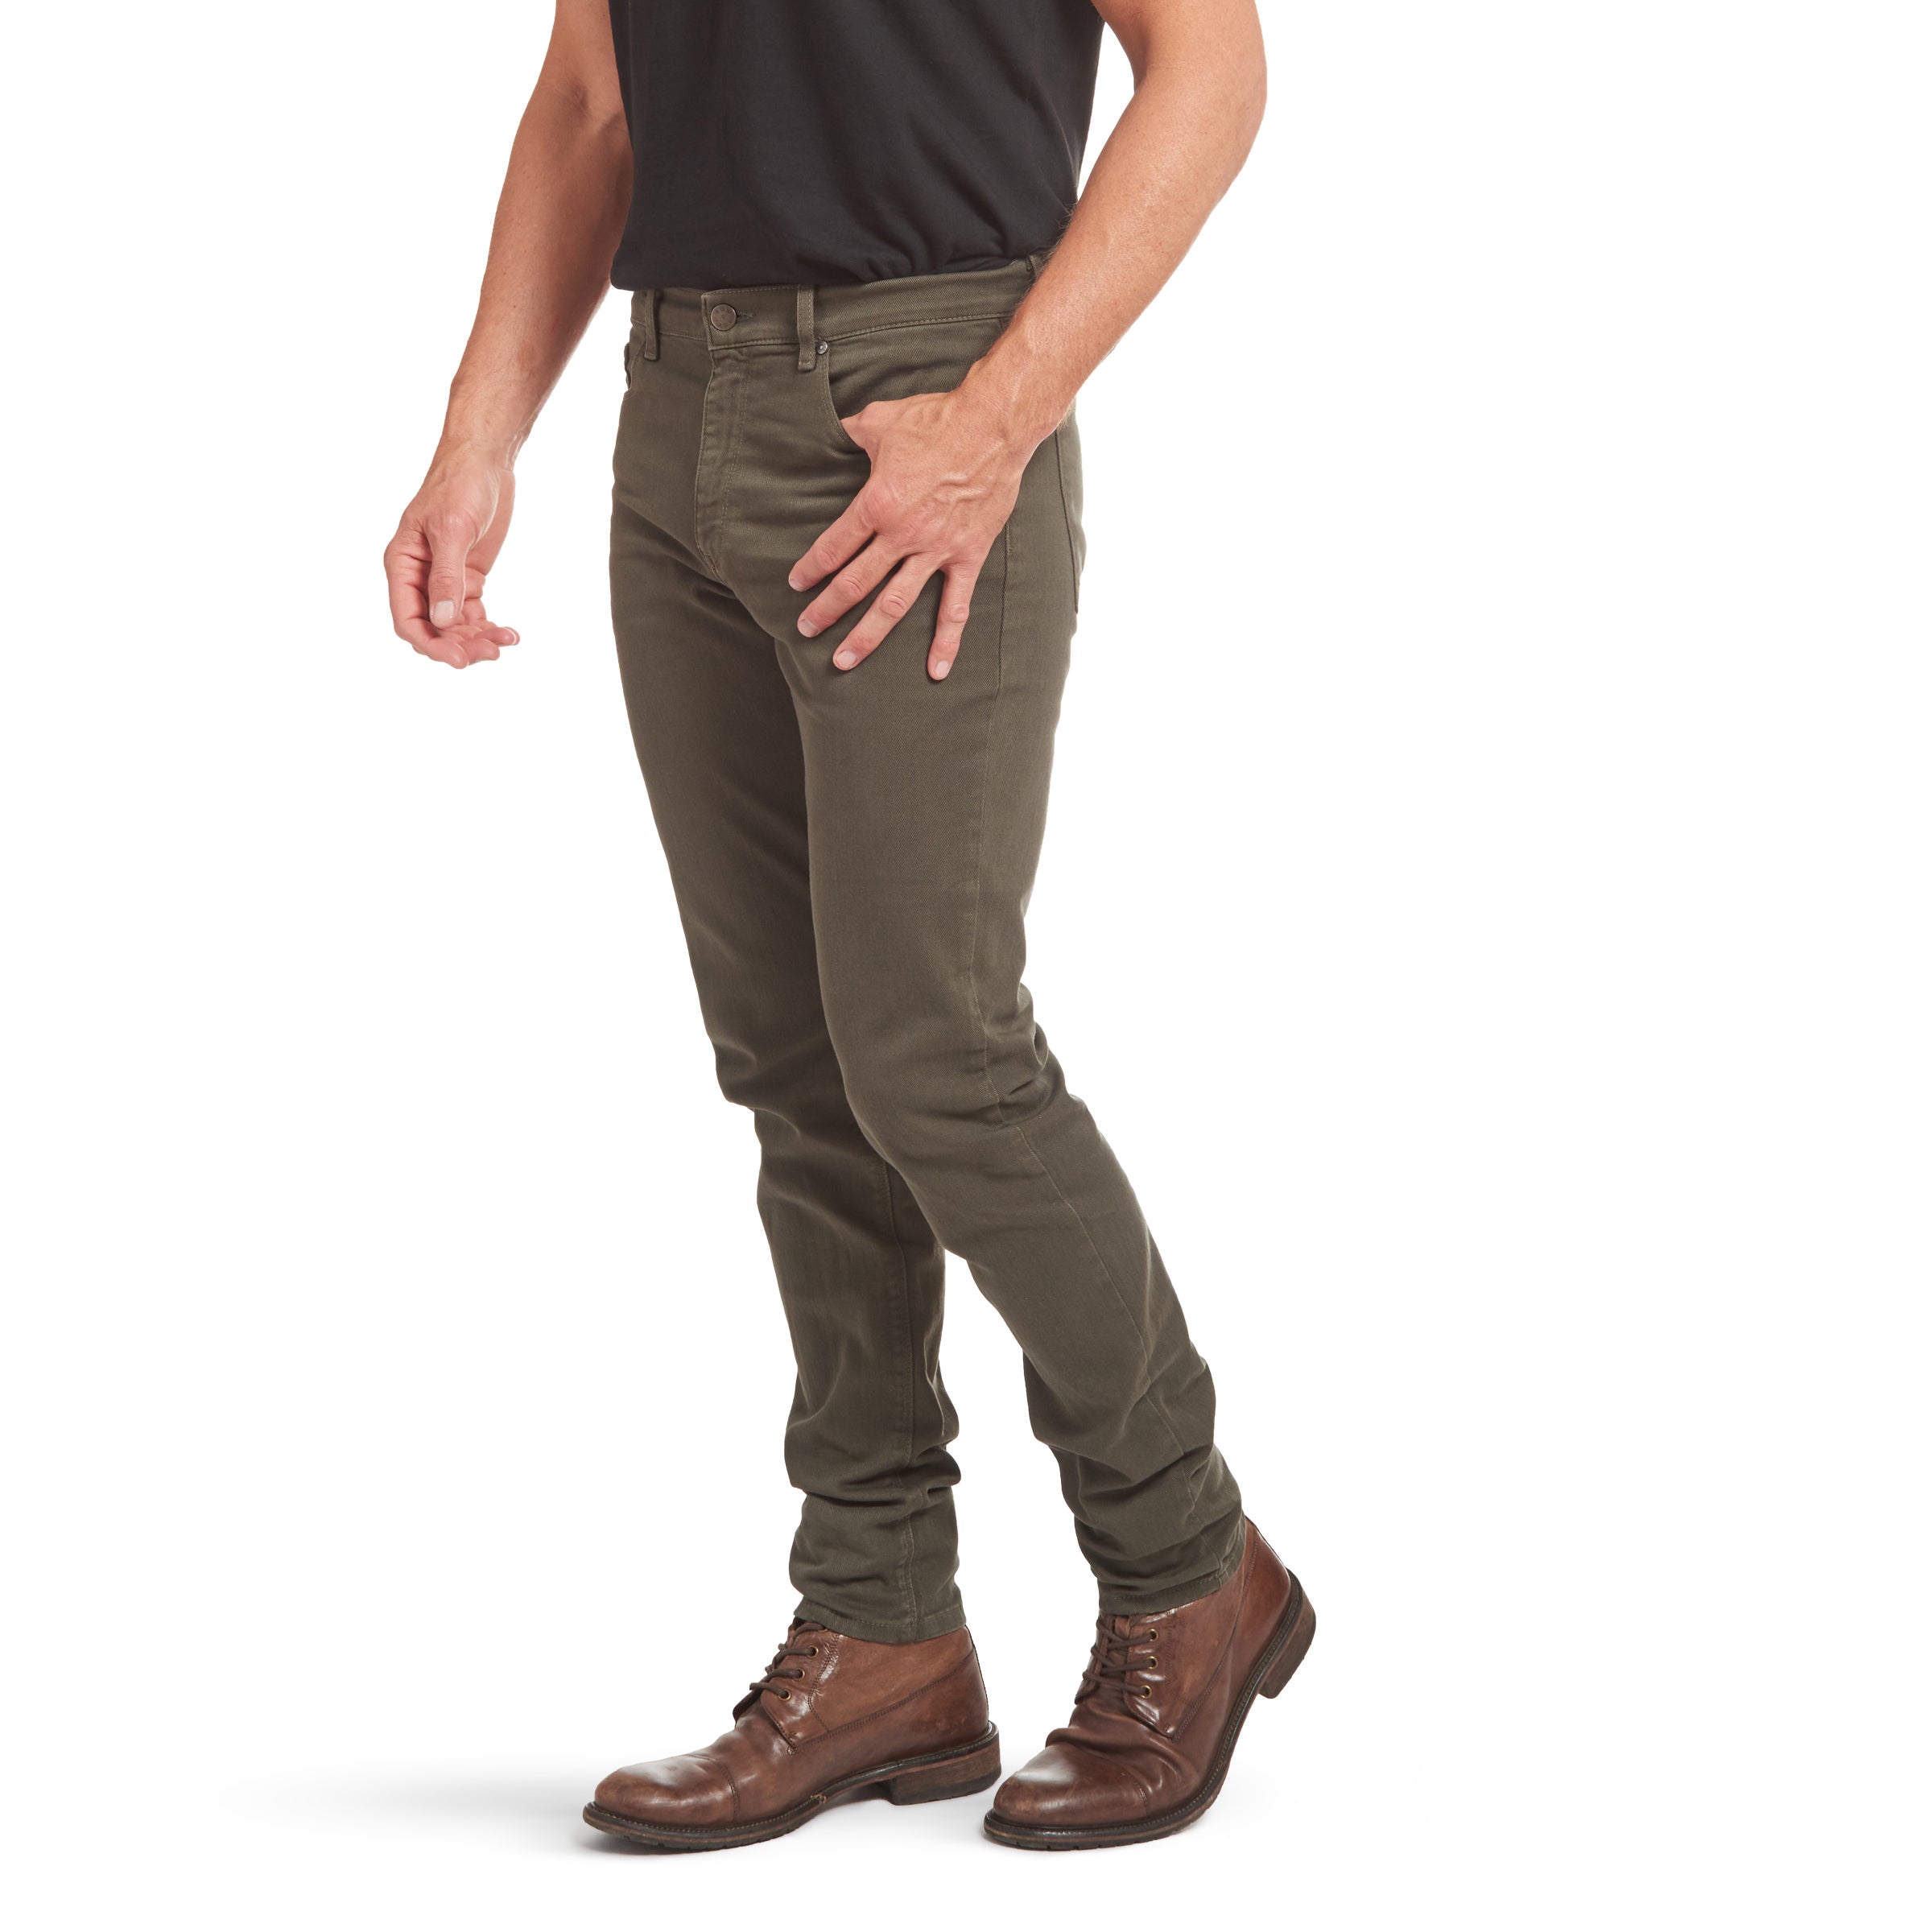 Men wearing Vert Militaire Skinny Mercer Jeans